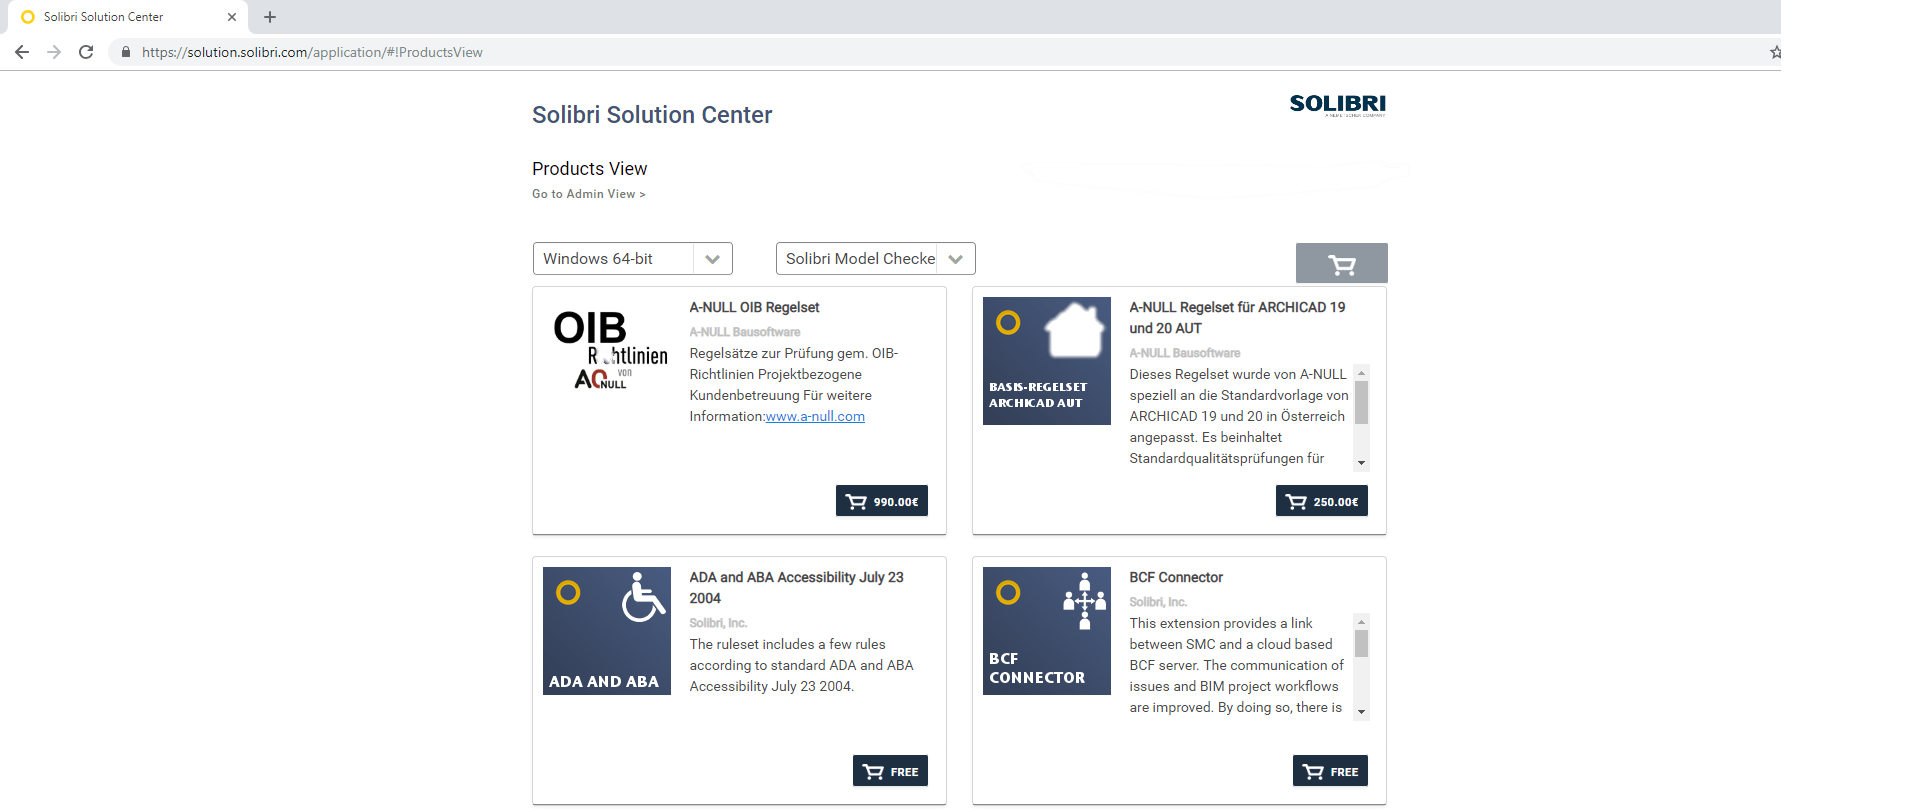 Solibri Solution Center - BCF Connector